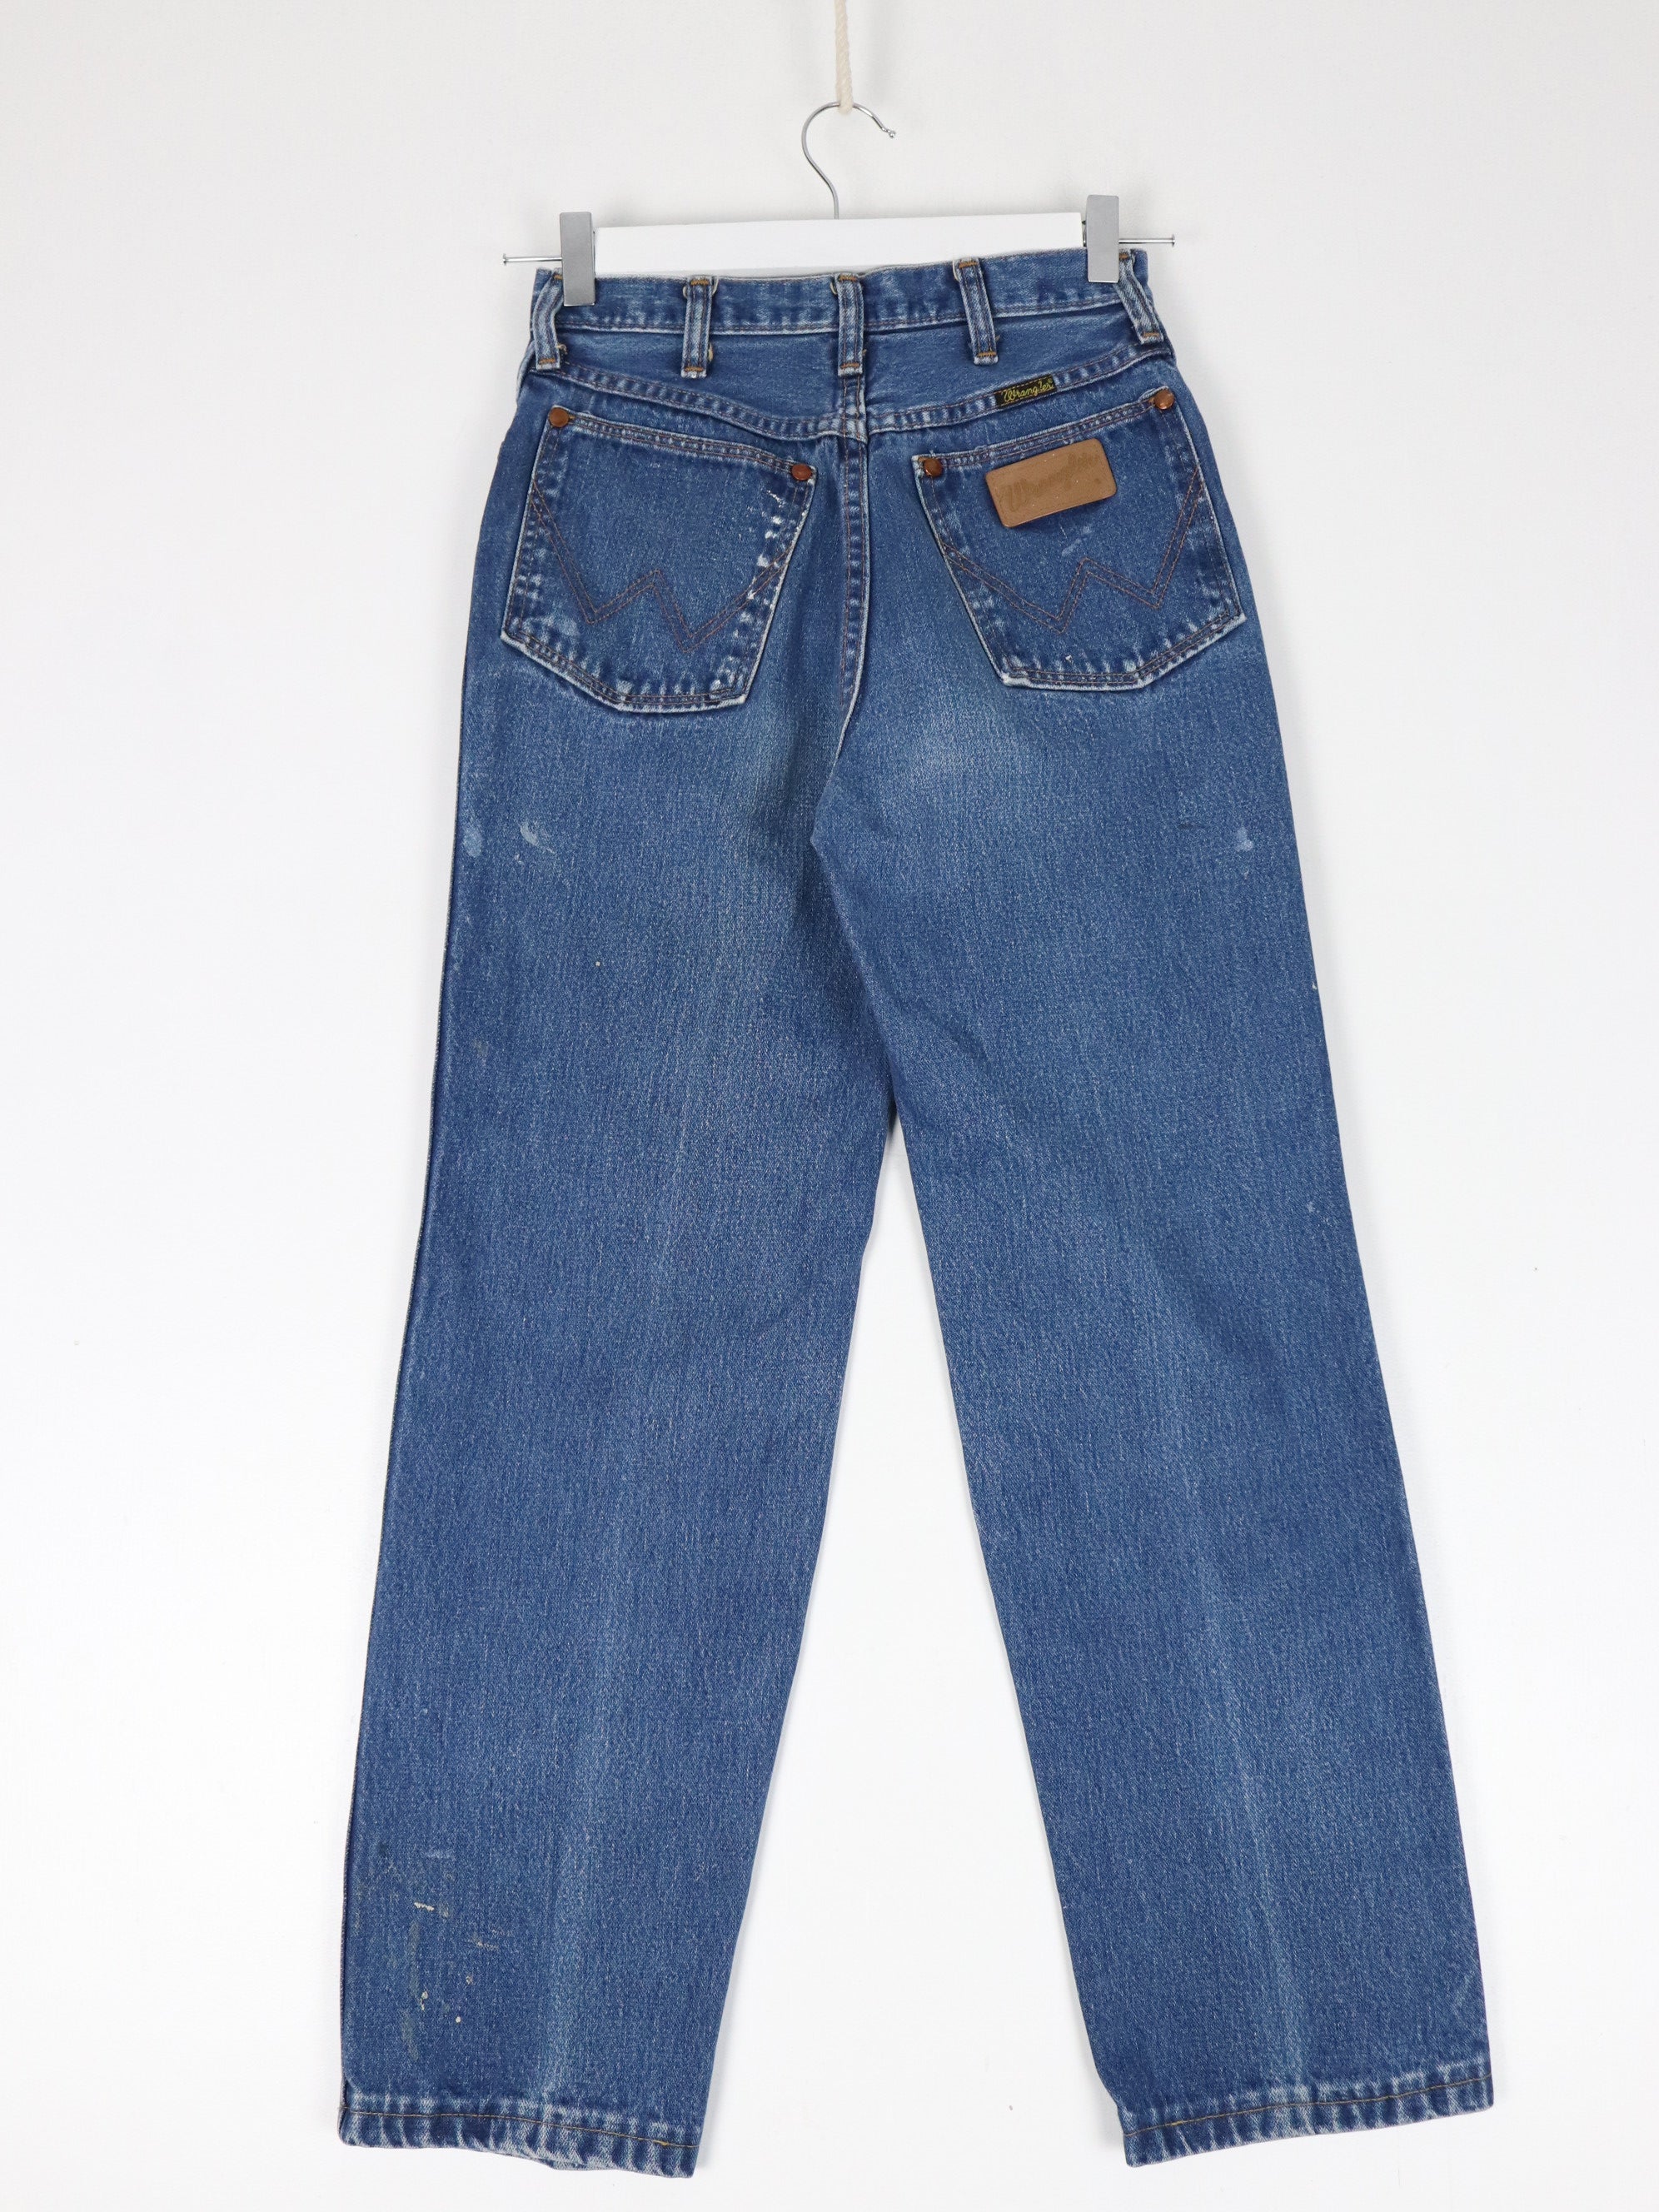 Vintage Wrangler Pants Womens 6 Blue Denim Jeans High Waisted 27 x